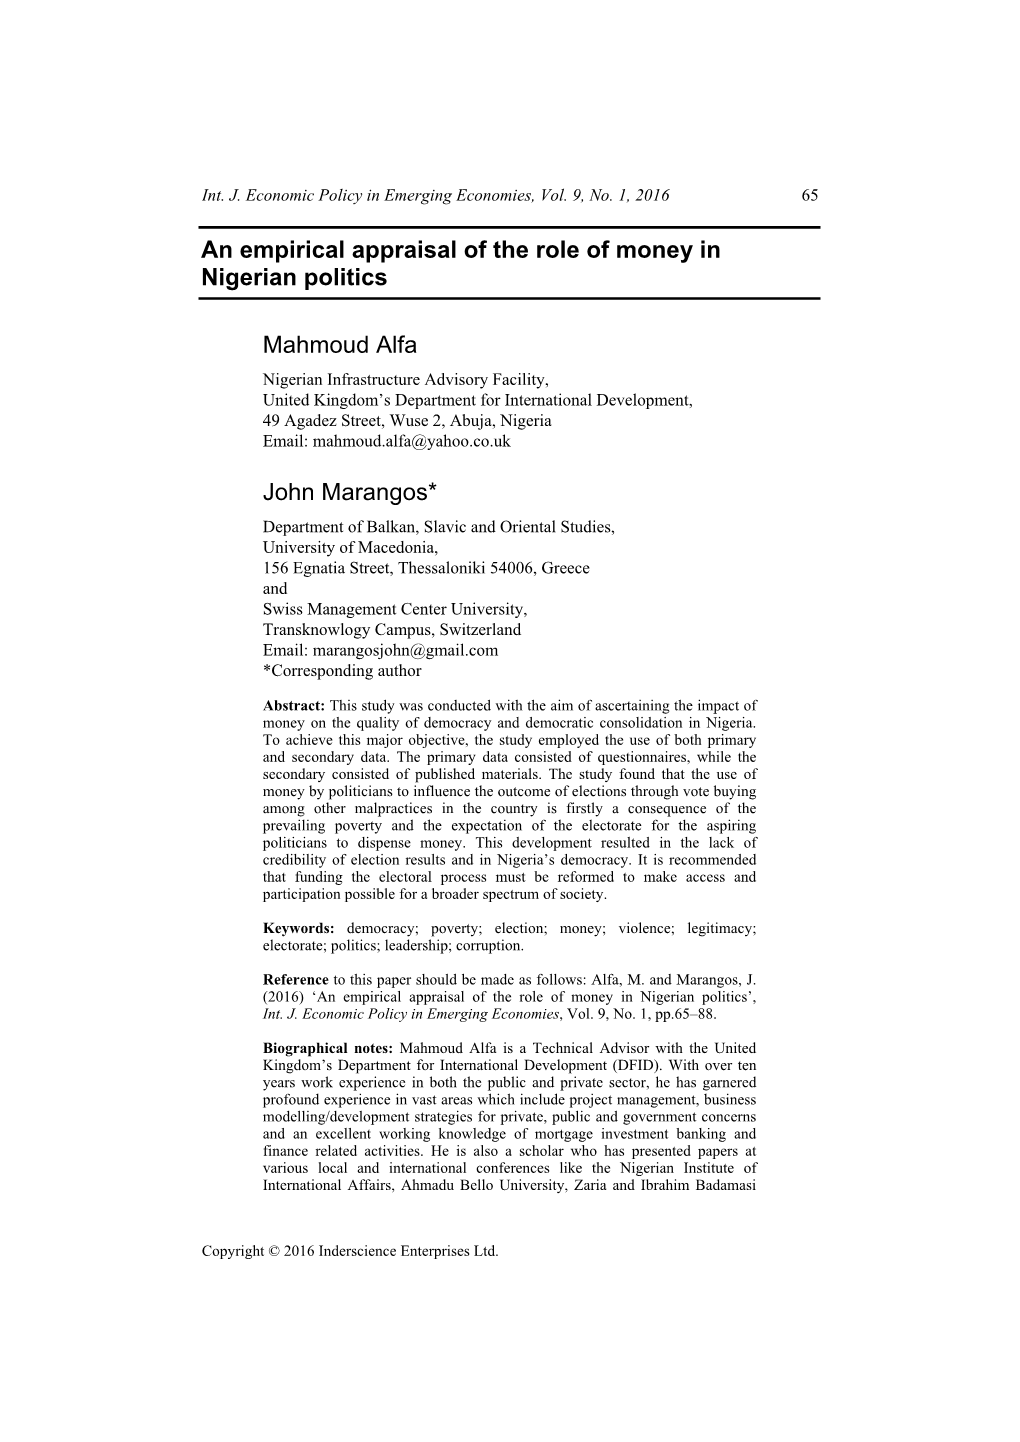 An Empirical Appraisal of the Role of Money in Nigerian Politics